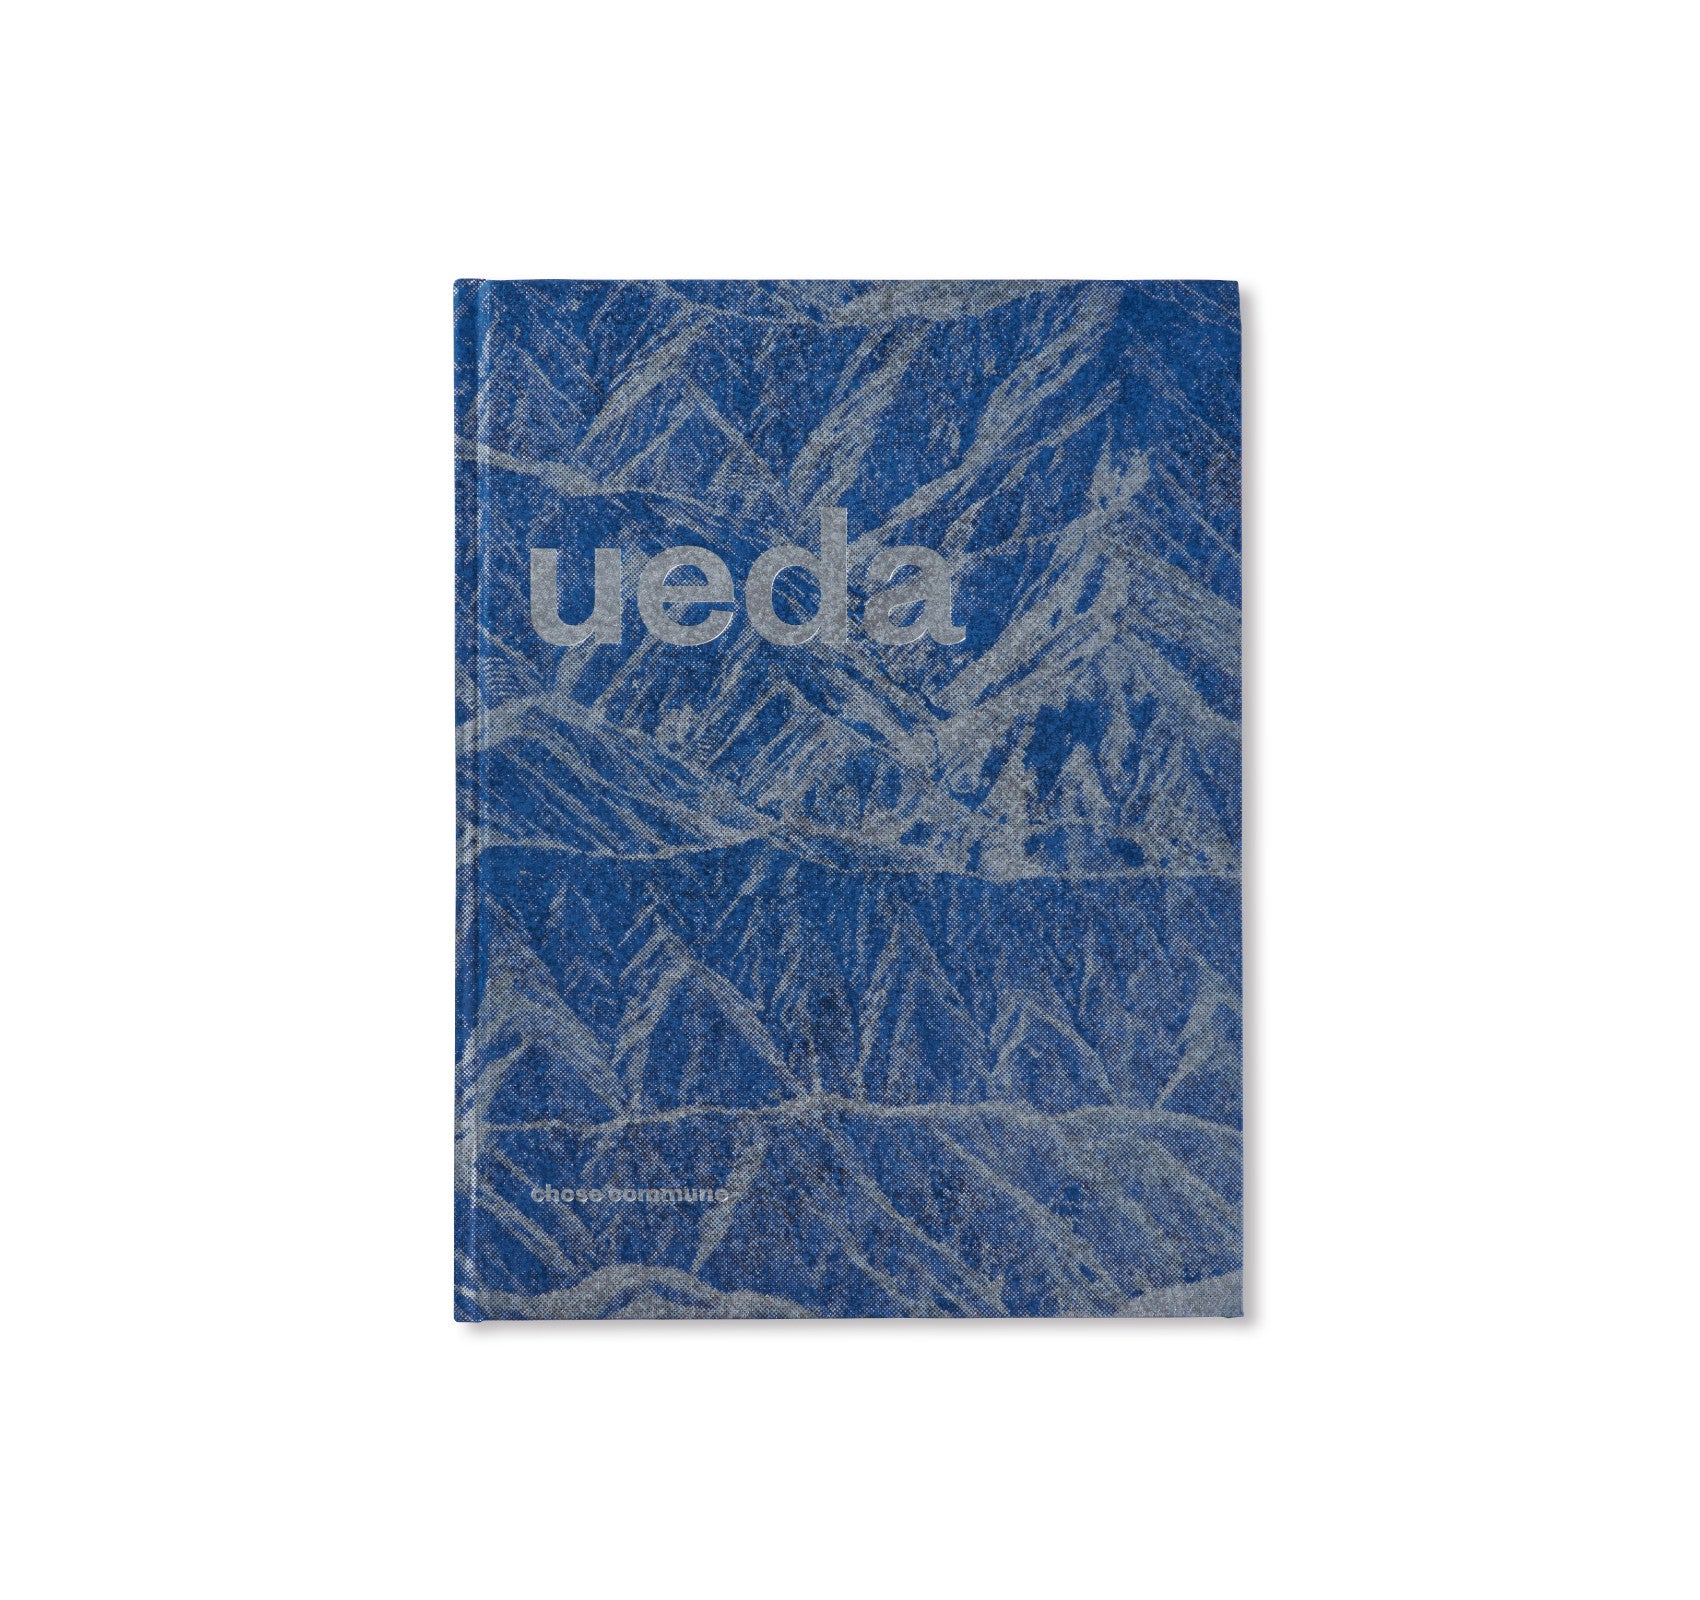 SHOJI UEDA by Shoji Ueda [SECOND EDITION / DAMAGED]